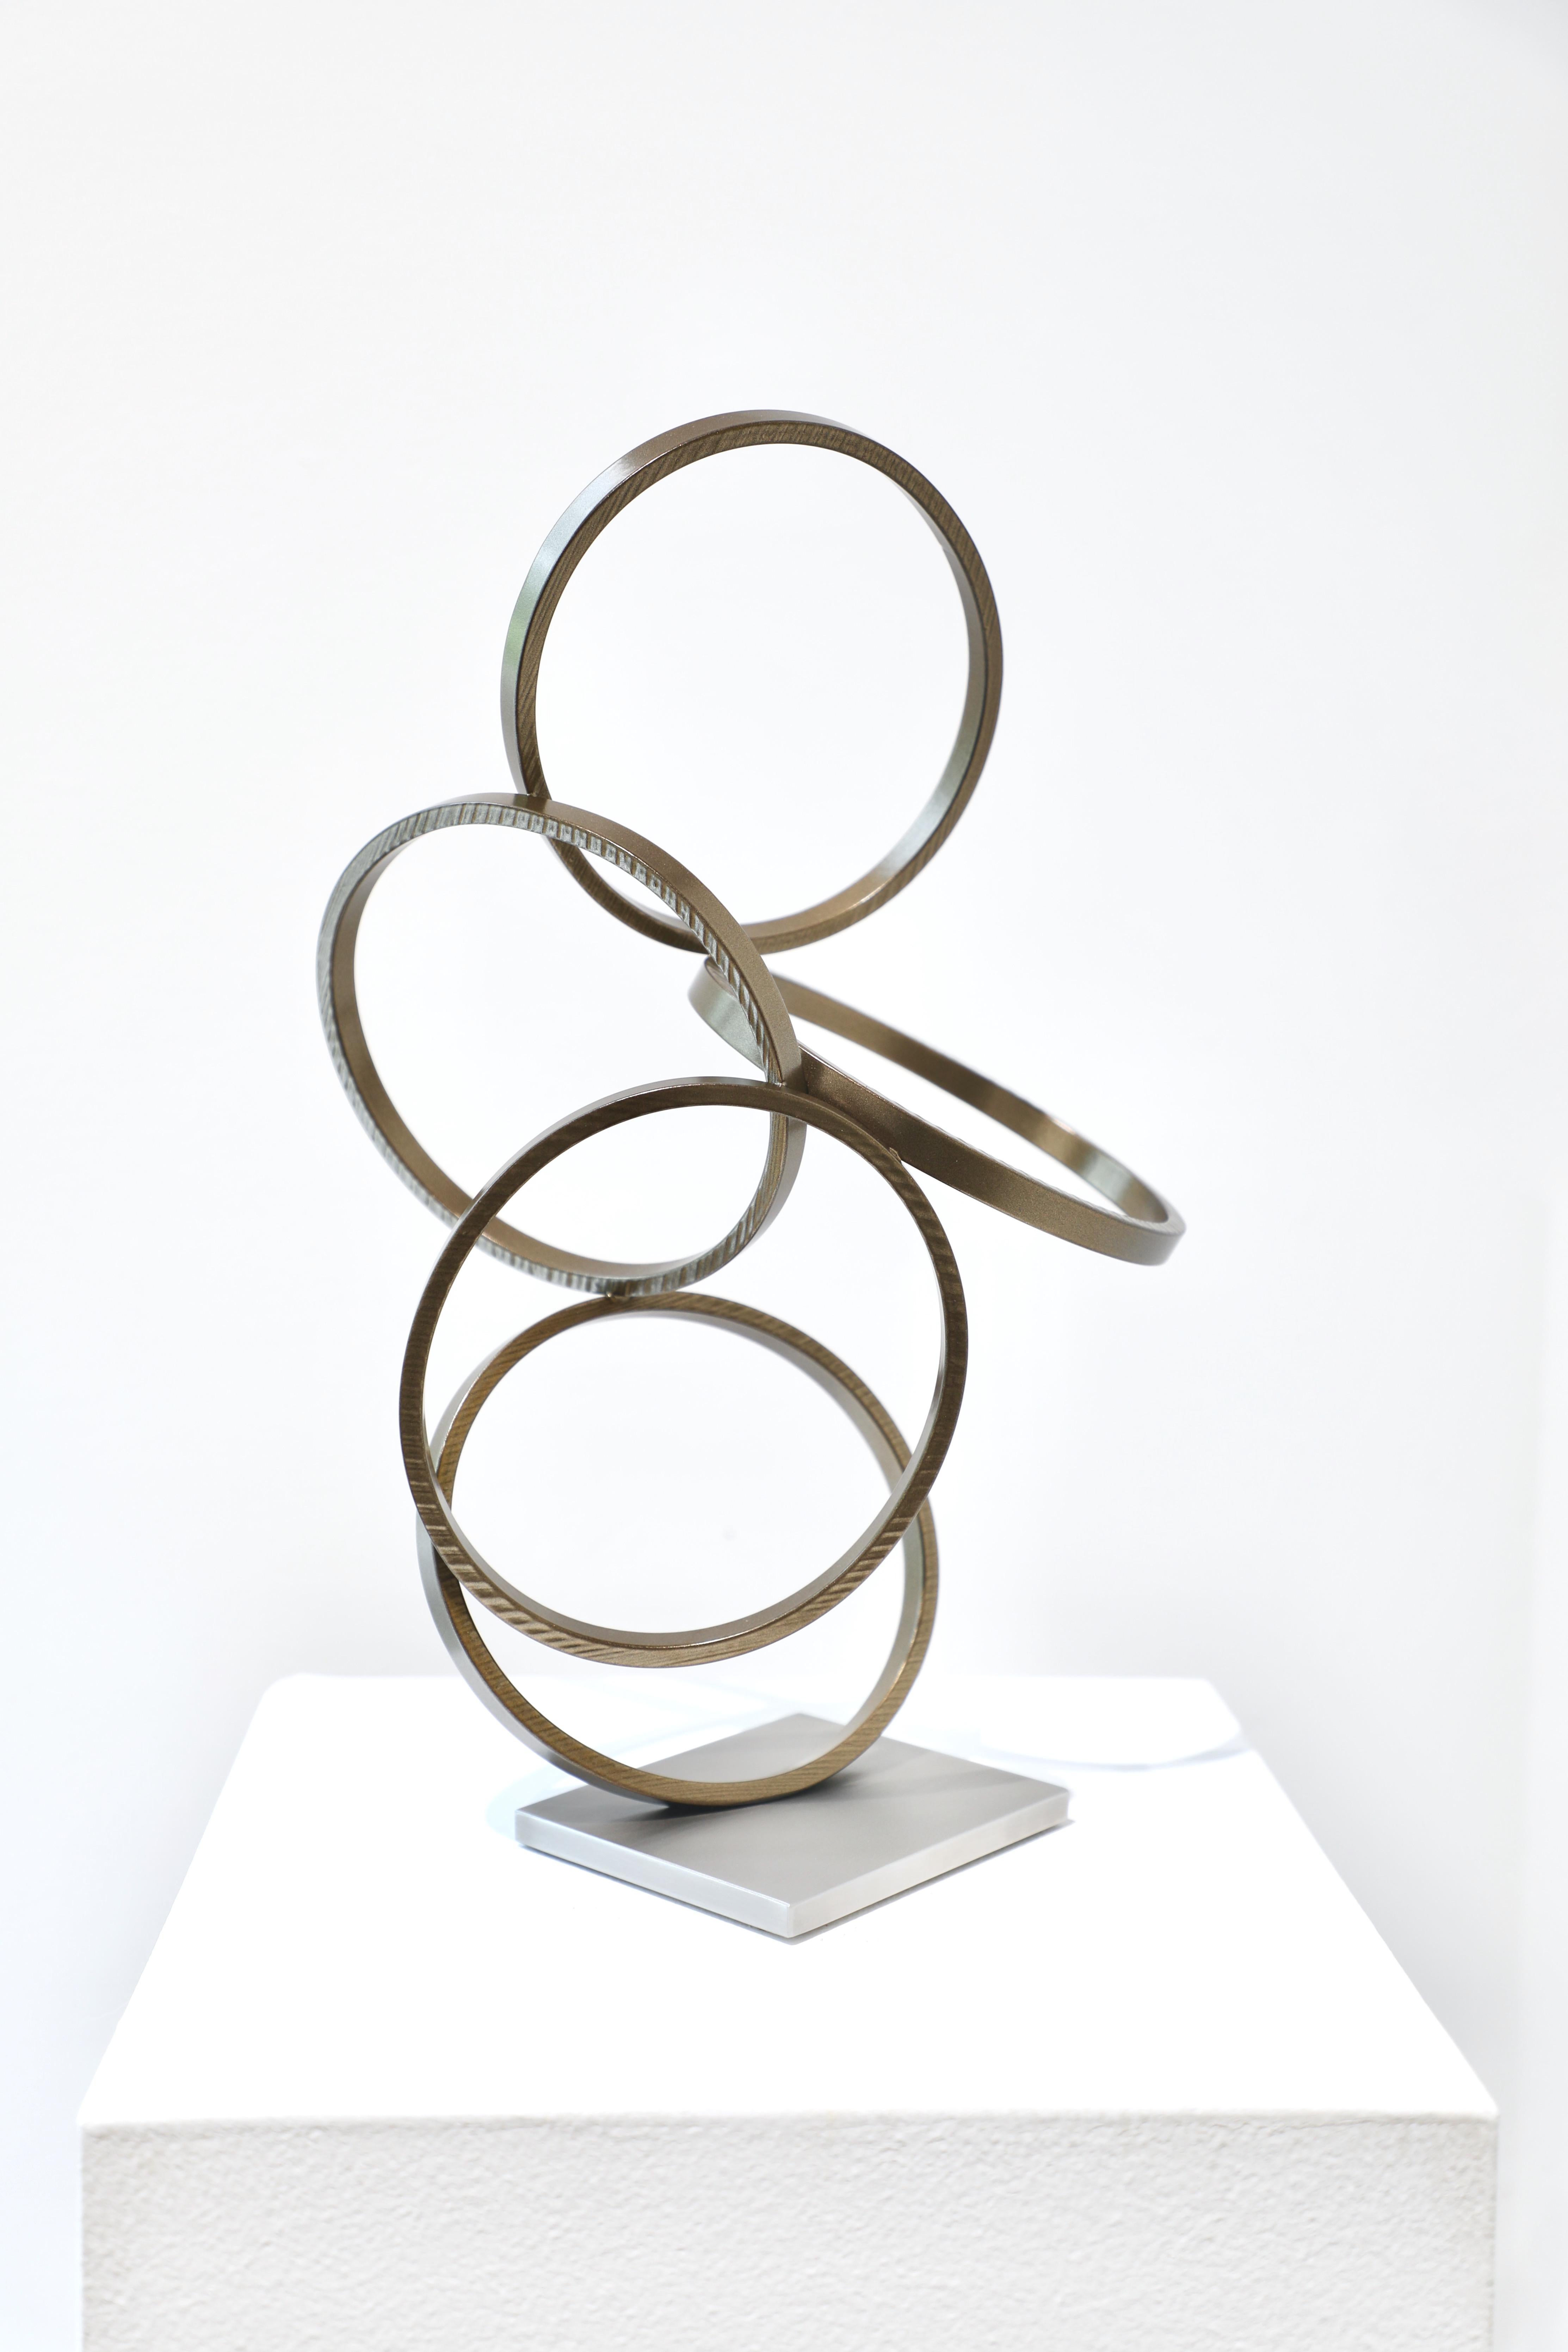 PS Study - Abstract Sculpture by Matt Devine